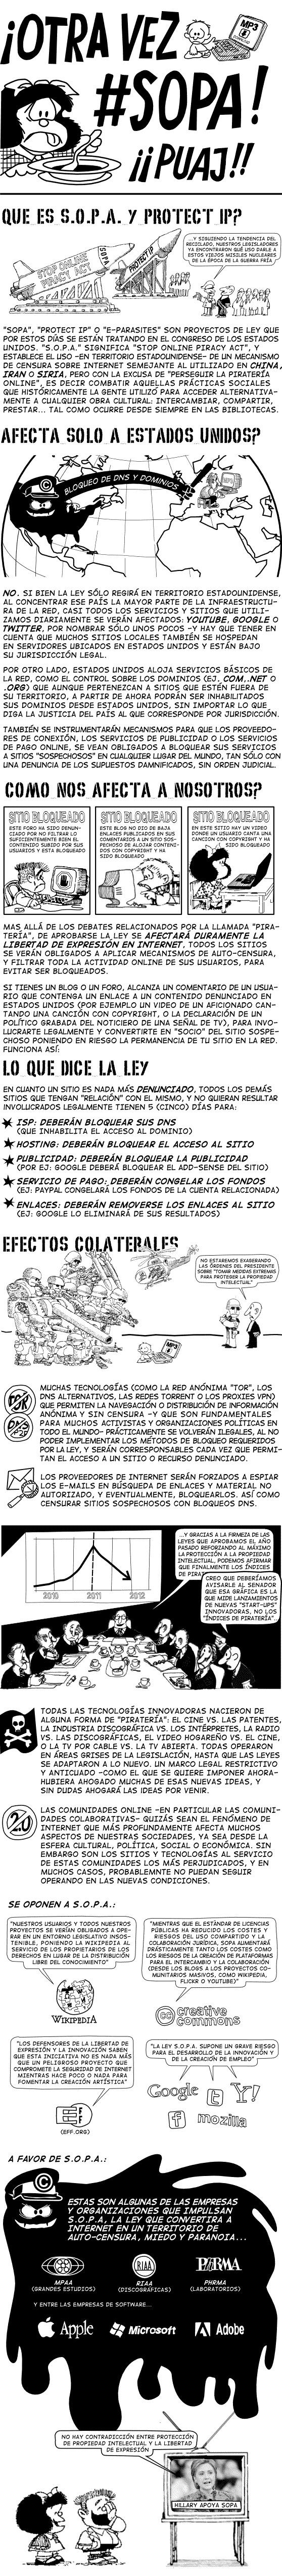 infografia-otra-vez-sopa-by-derechoaleer.org